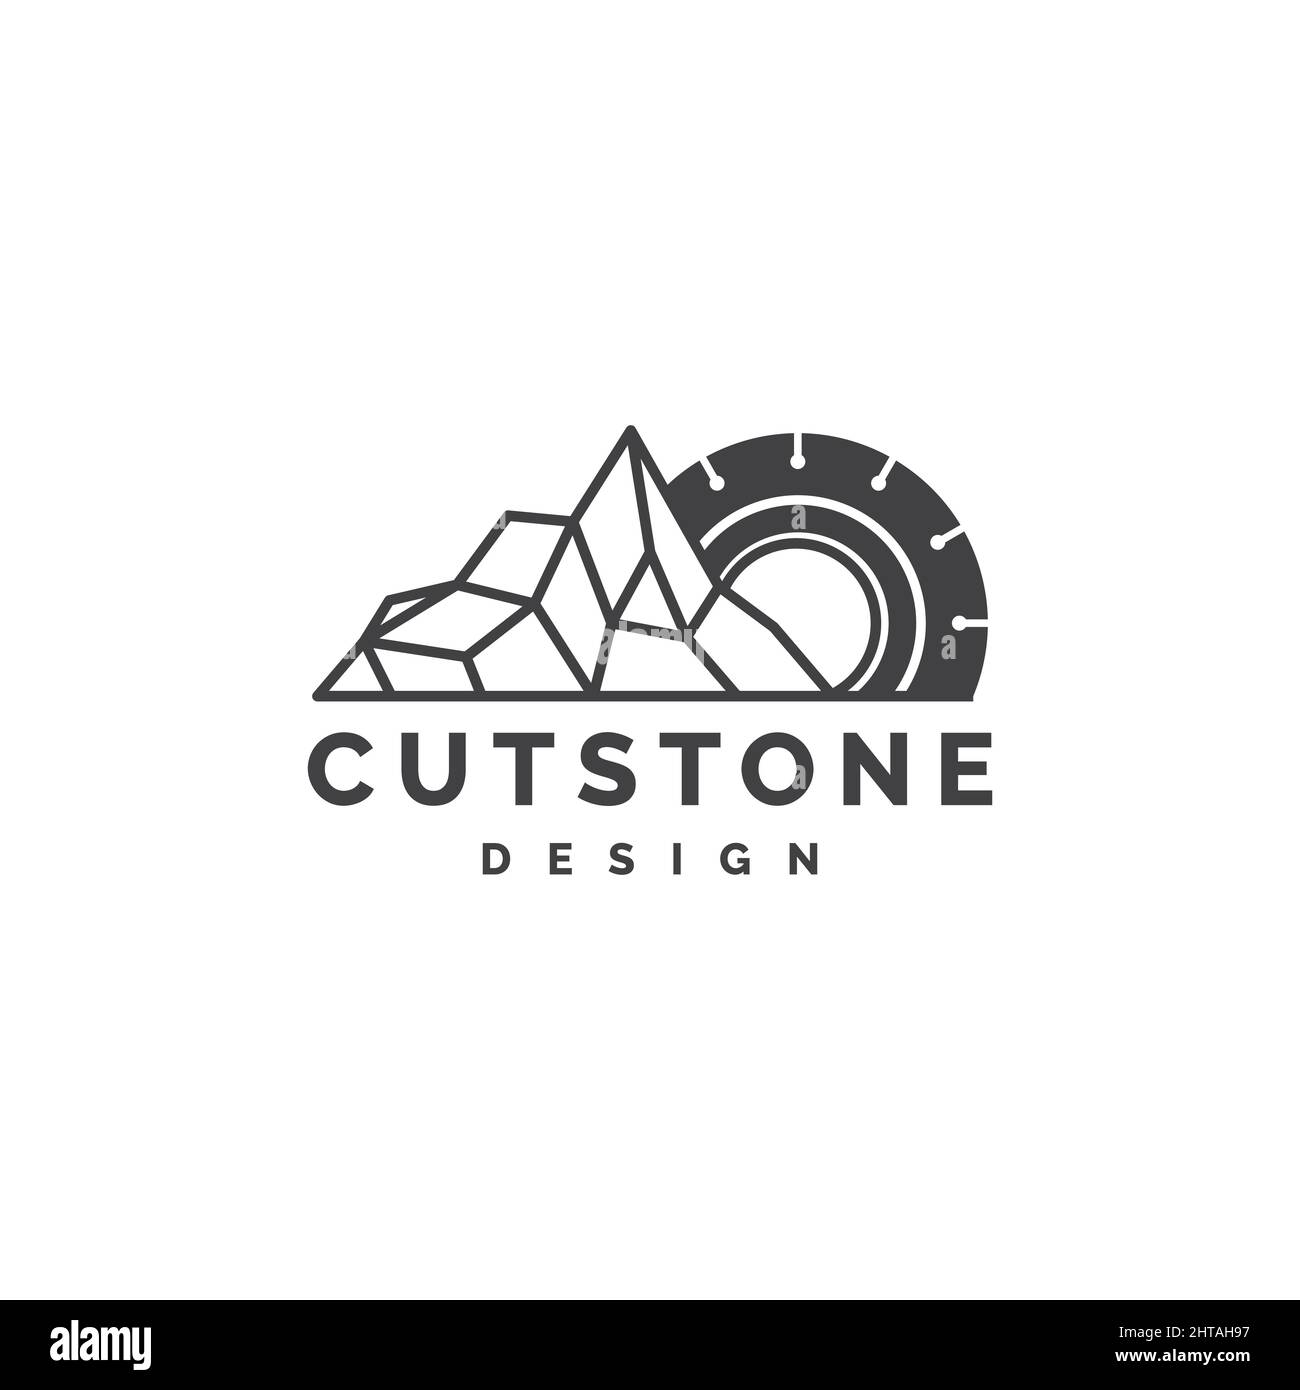 Cutting stone logo design illustration vector template Stock Vector